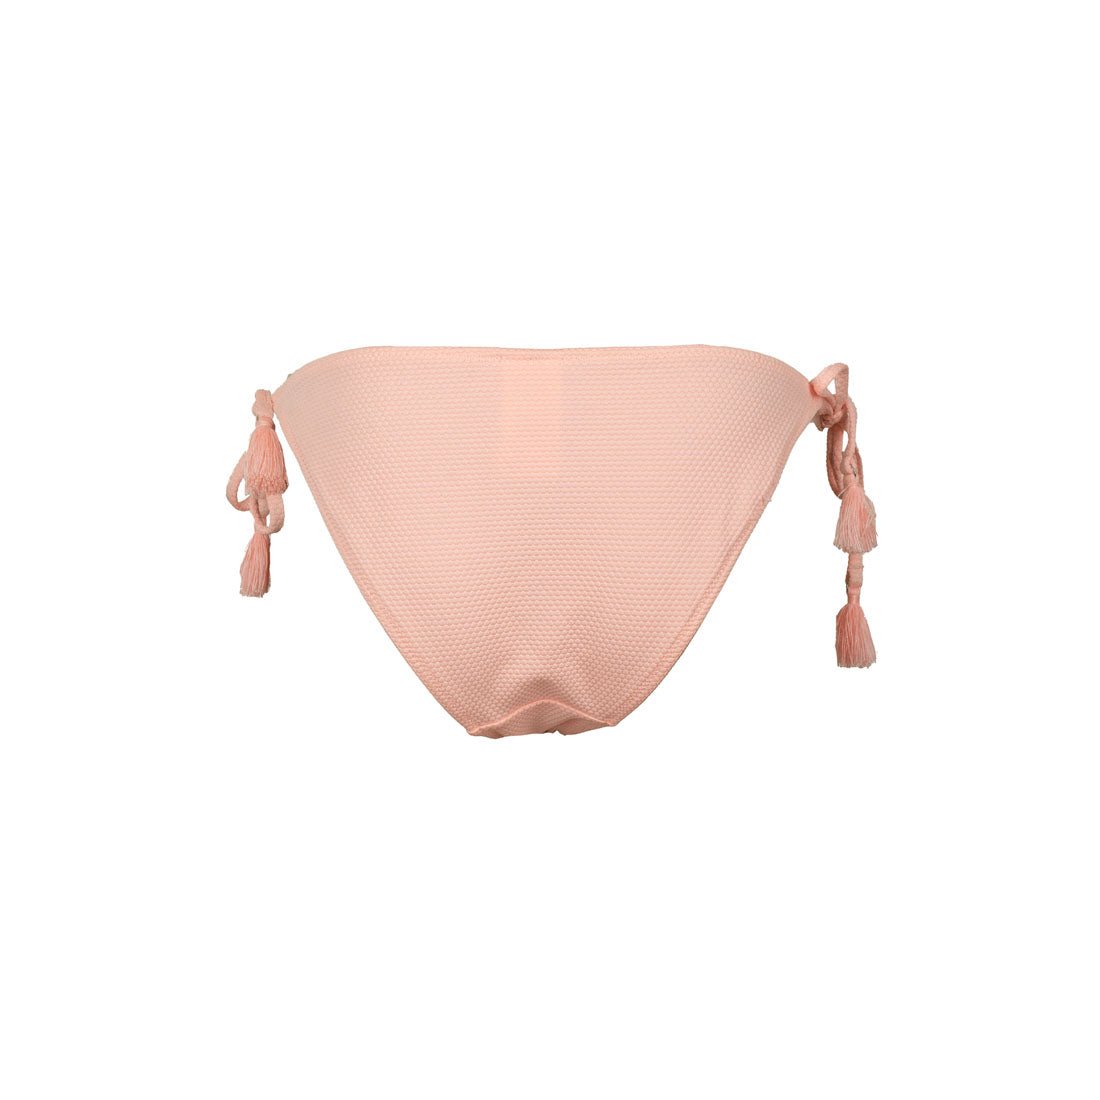 H&M Brand New Bikini Bottom - mymadstore.com